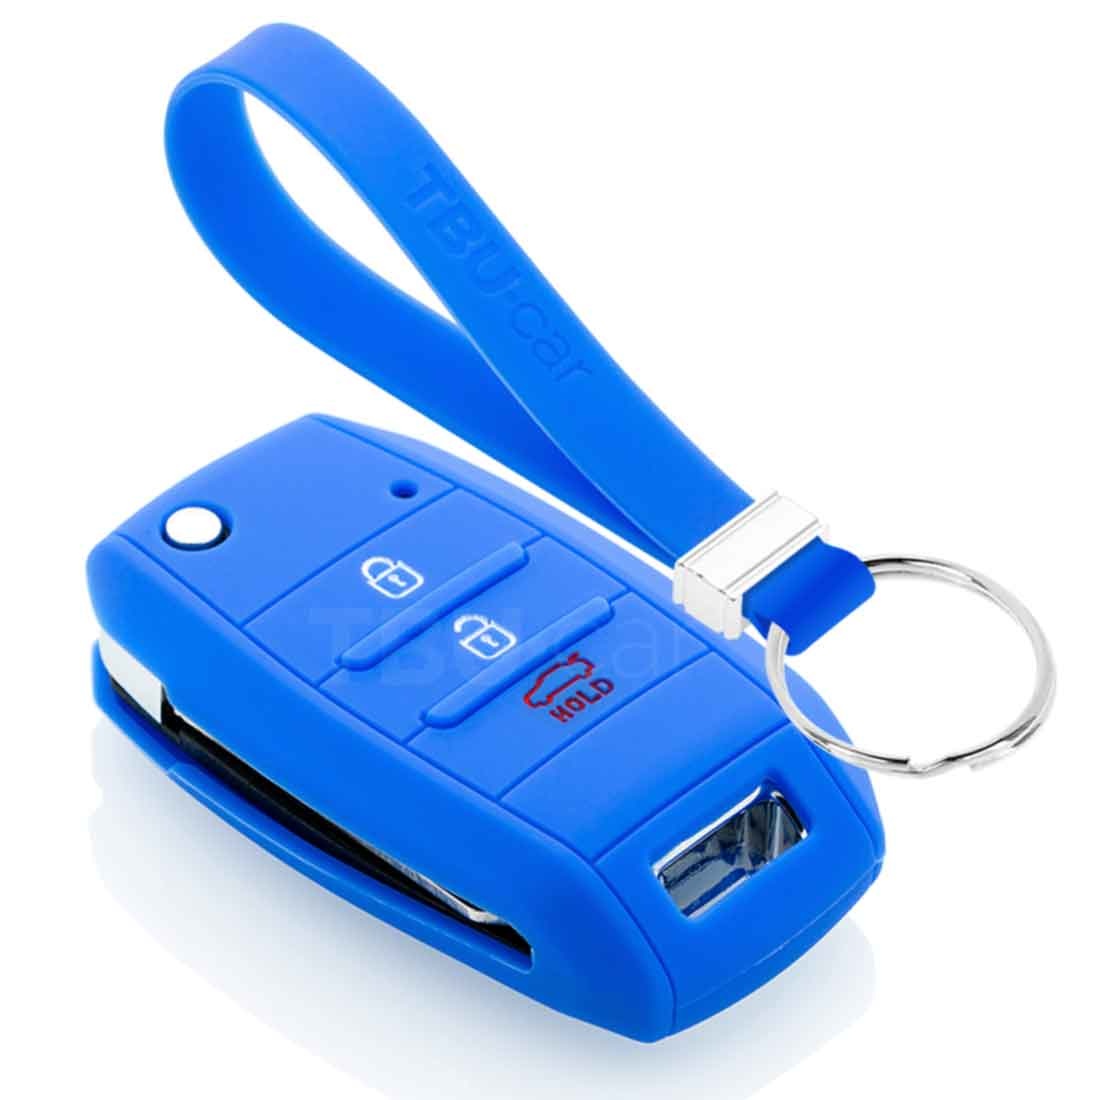 TBU car TBU car Car key cover compatible with Hyundai - Silicone Protective Remote Key Shell - FOB Case Cover - Blue